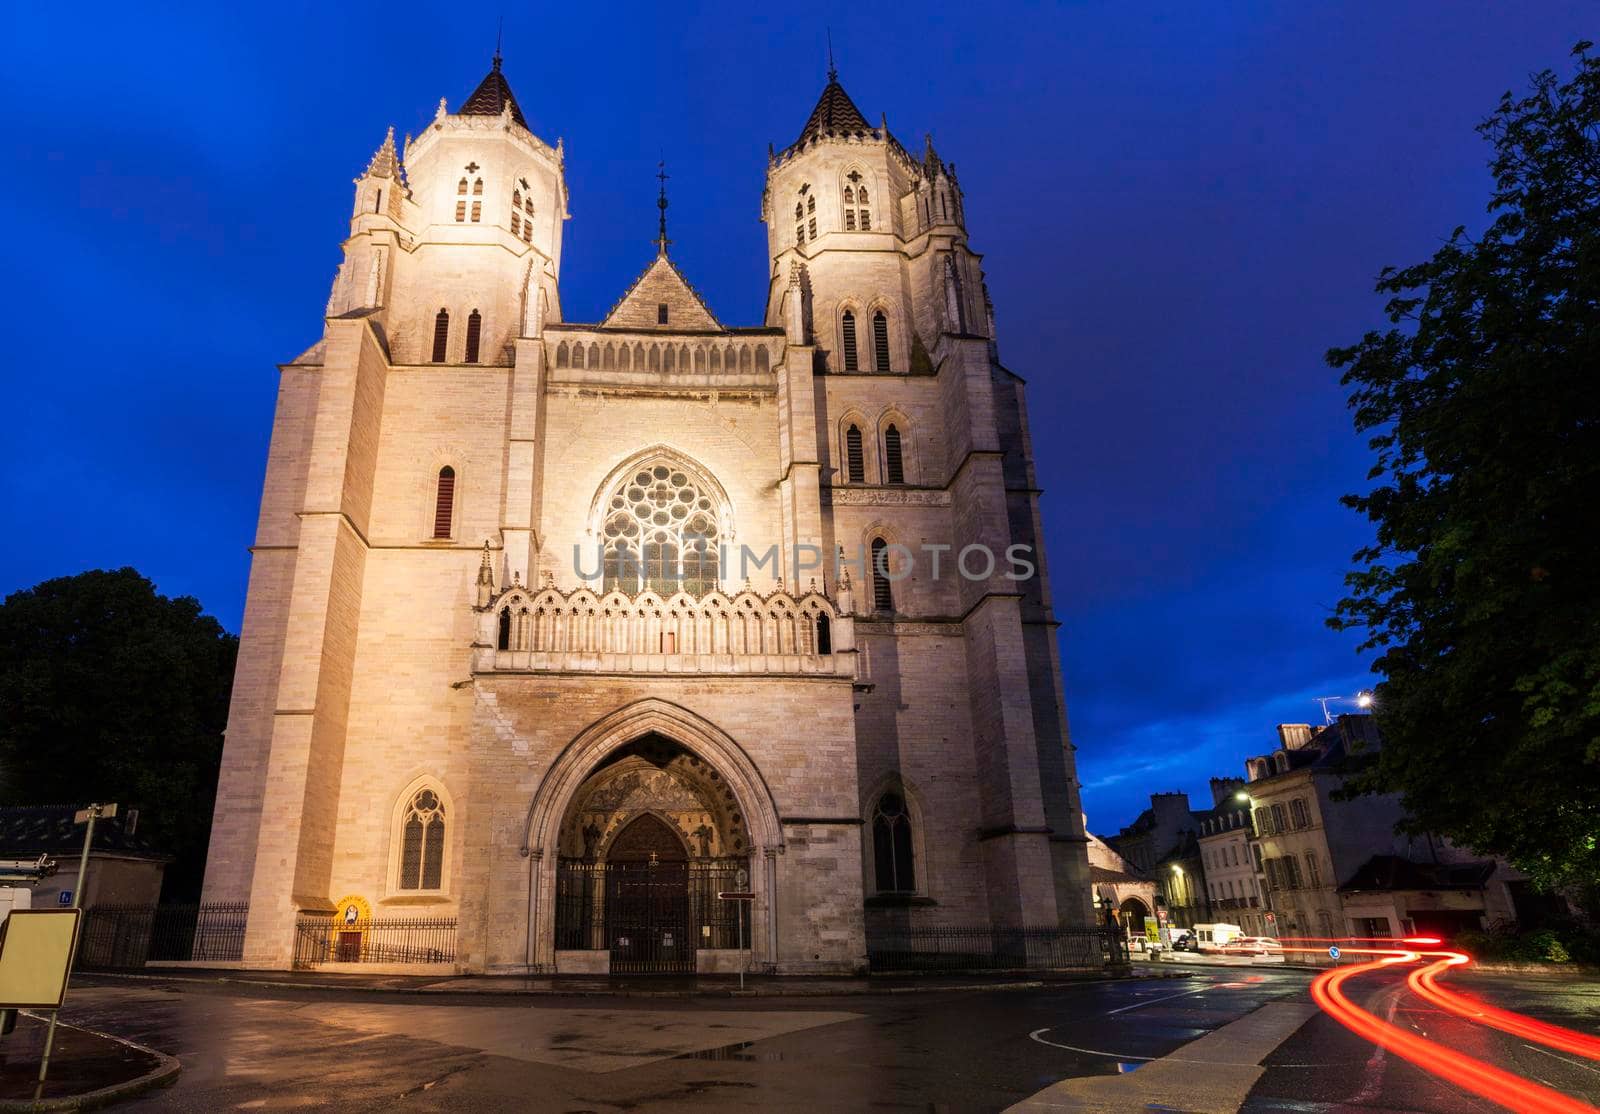 St Benigne Cathedral in Dijon by benkrut